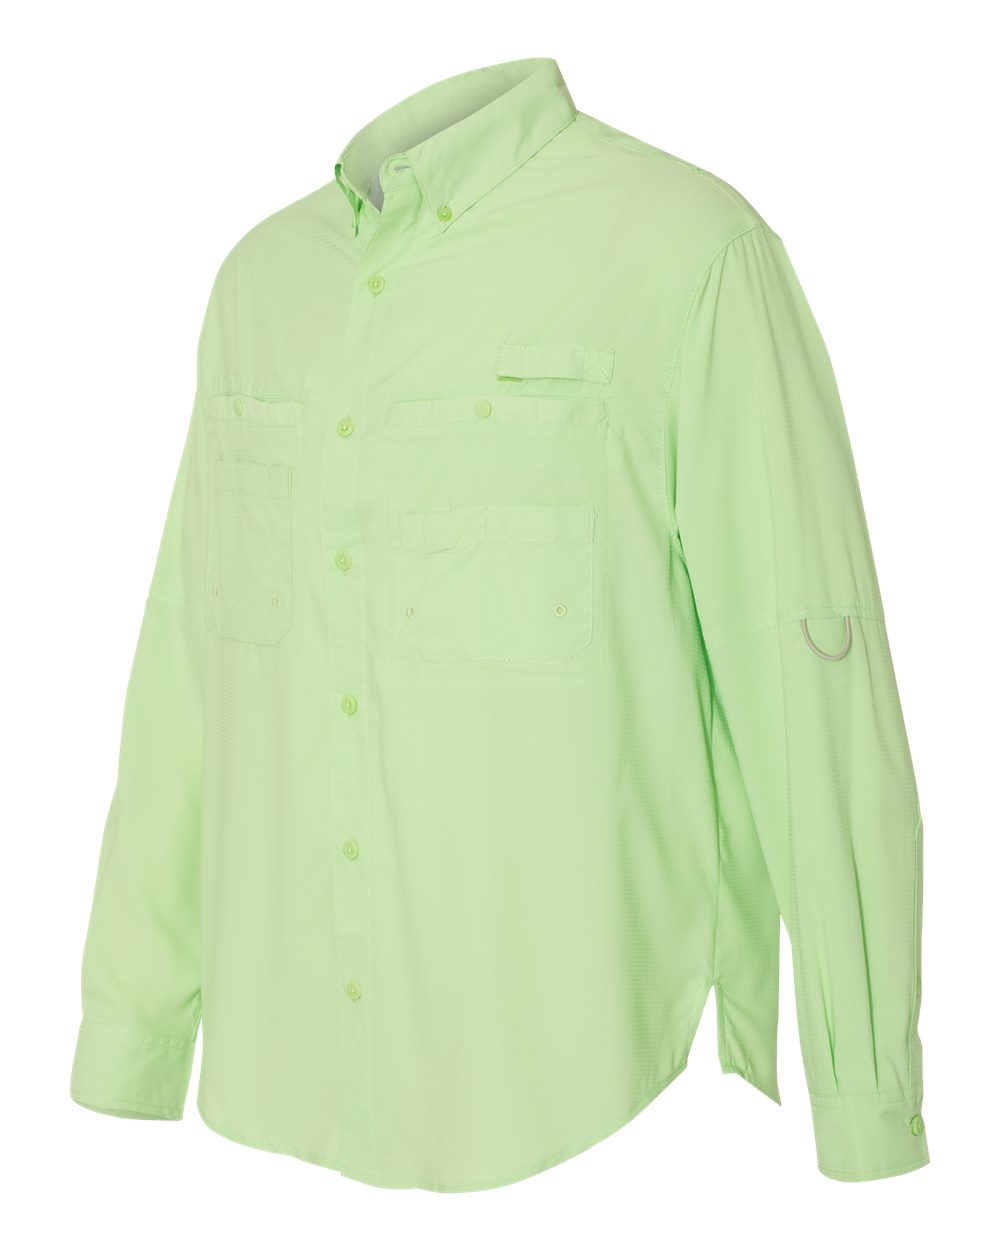 Hilton ZP2299 - Baja Long Sleeve Fishing Shirt